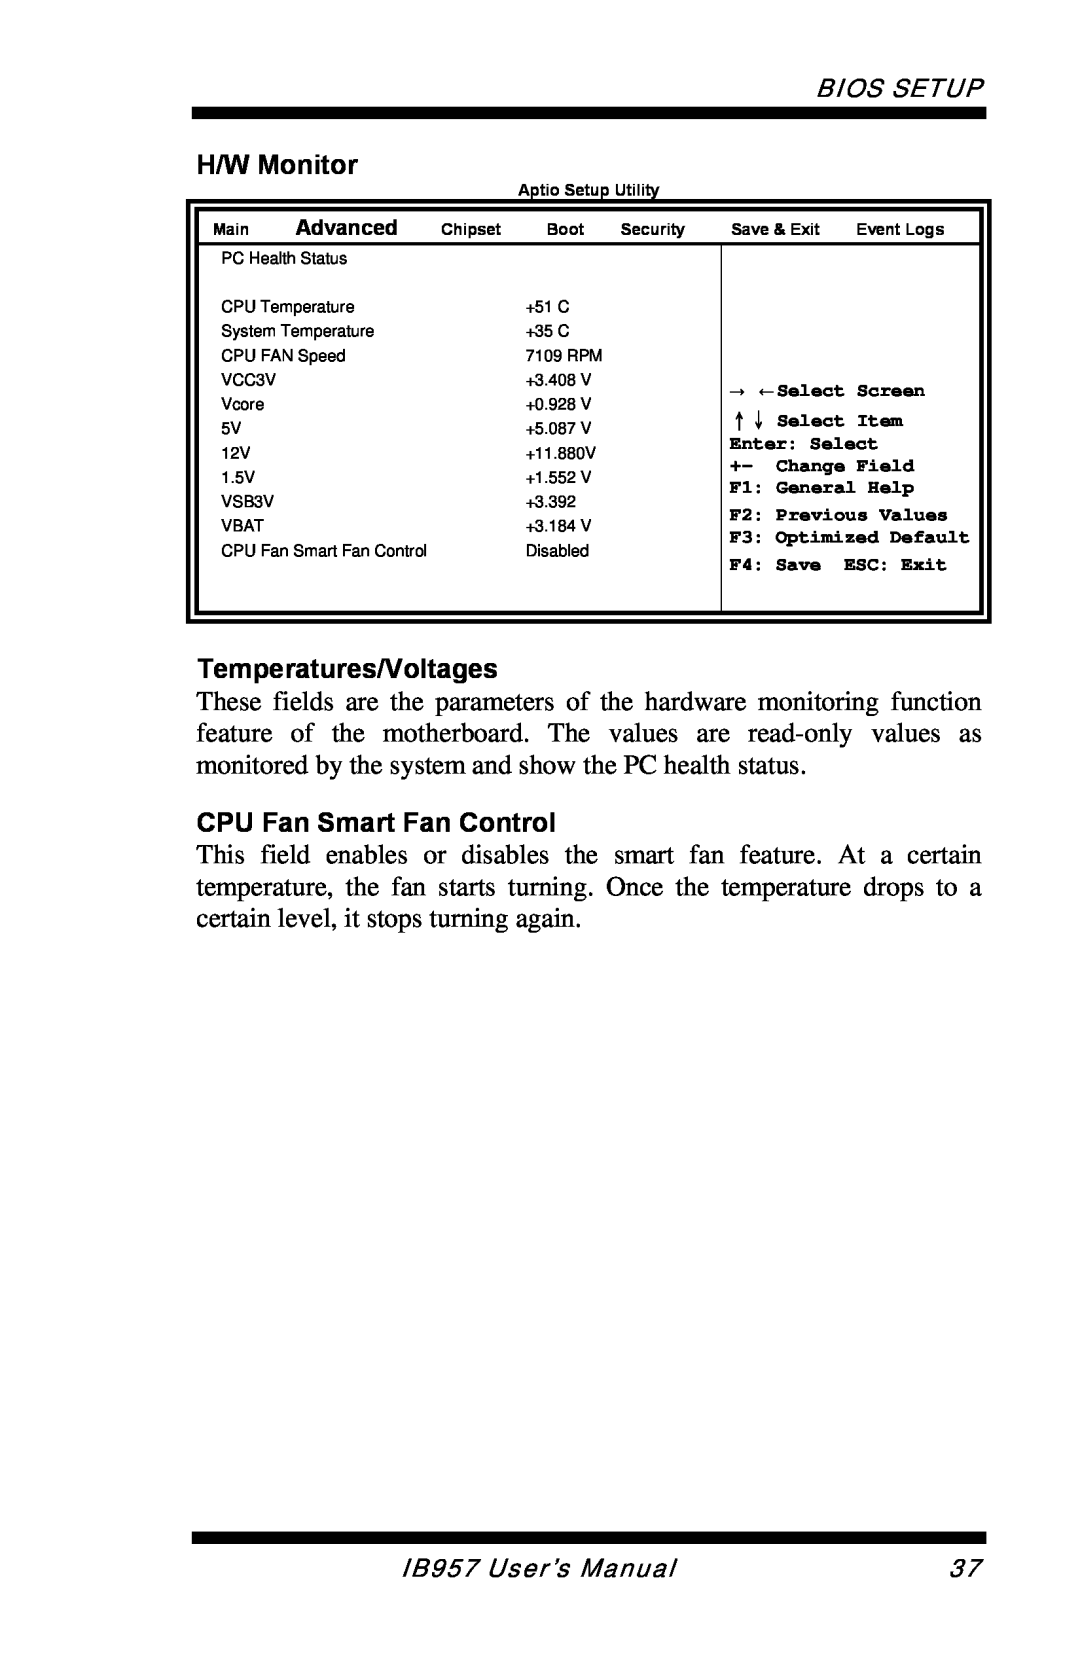 Intel IB957 user manual H/W Monitor, Temperatures/Voltages, CPU Fan Smart Fan Control 